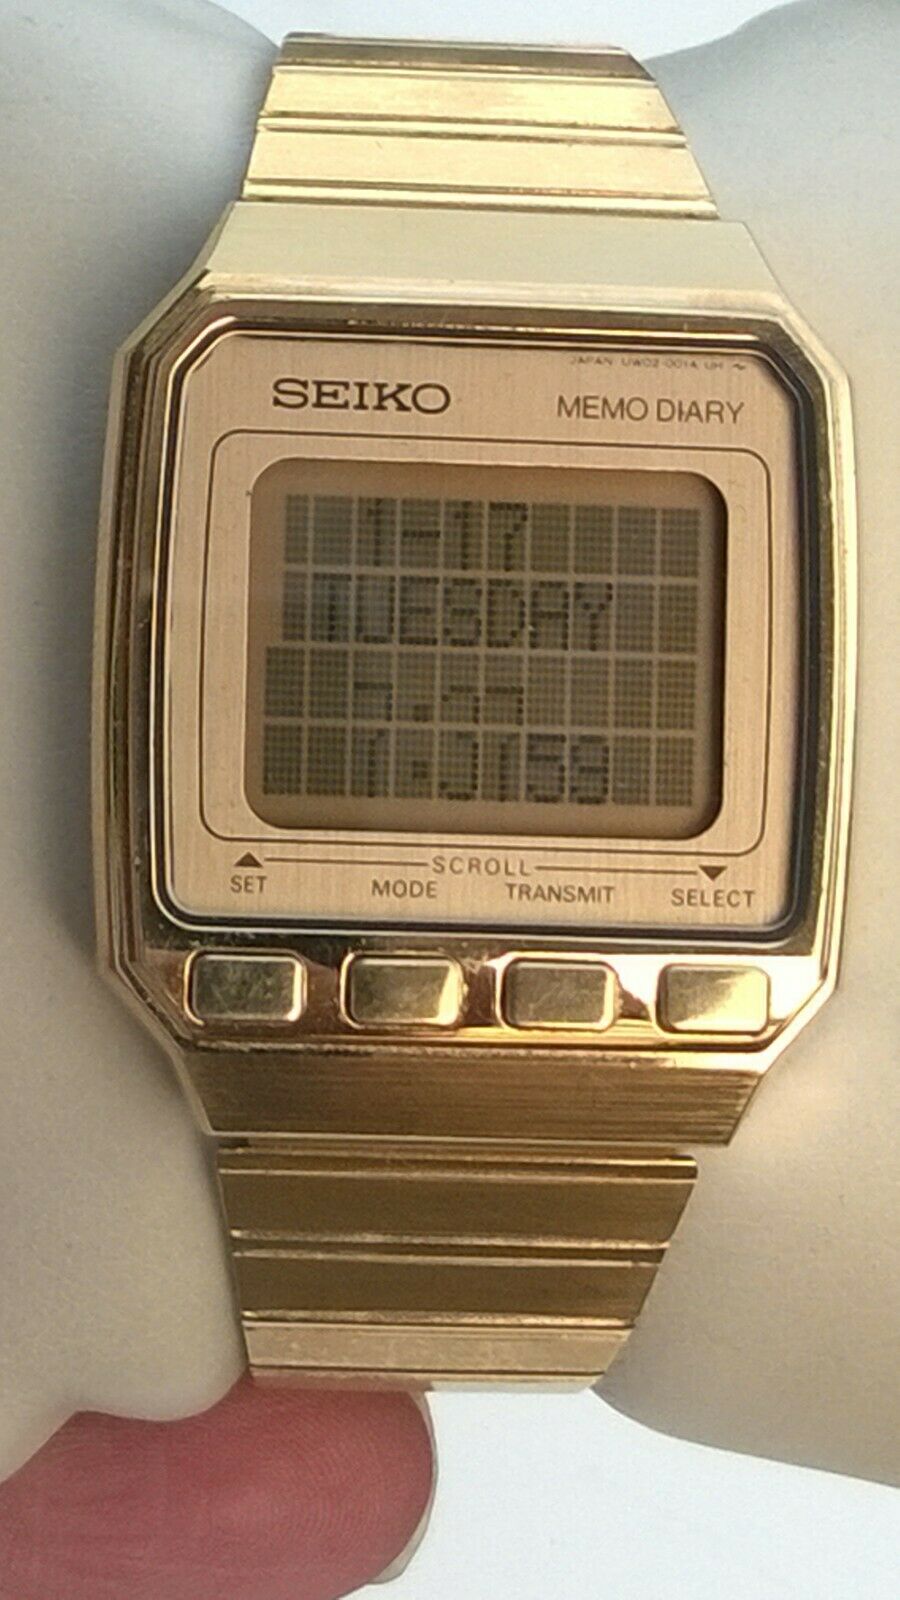 Seiko Memo Diary UW02-0010 Vintage LCD Digital Watch | WatchCharts